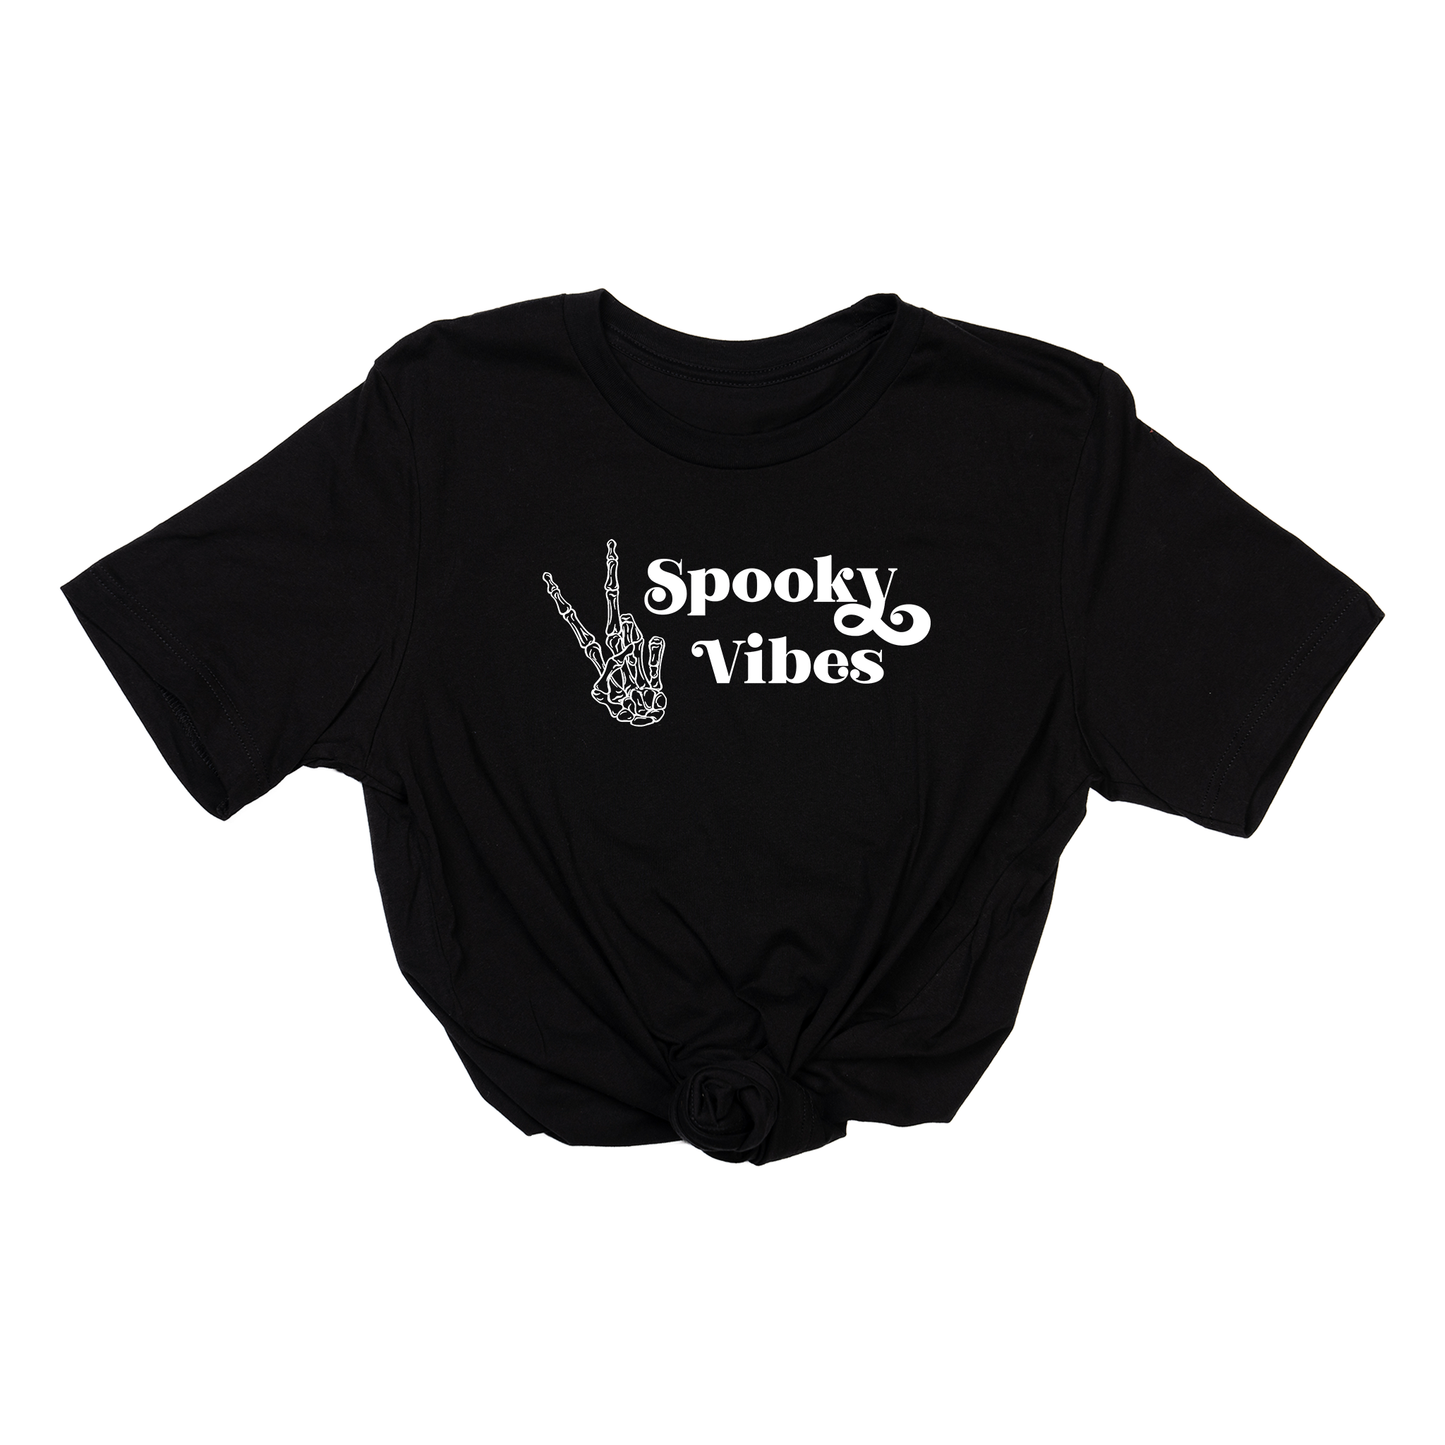 Spooky Vibes (White) - Tee (Black)